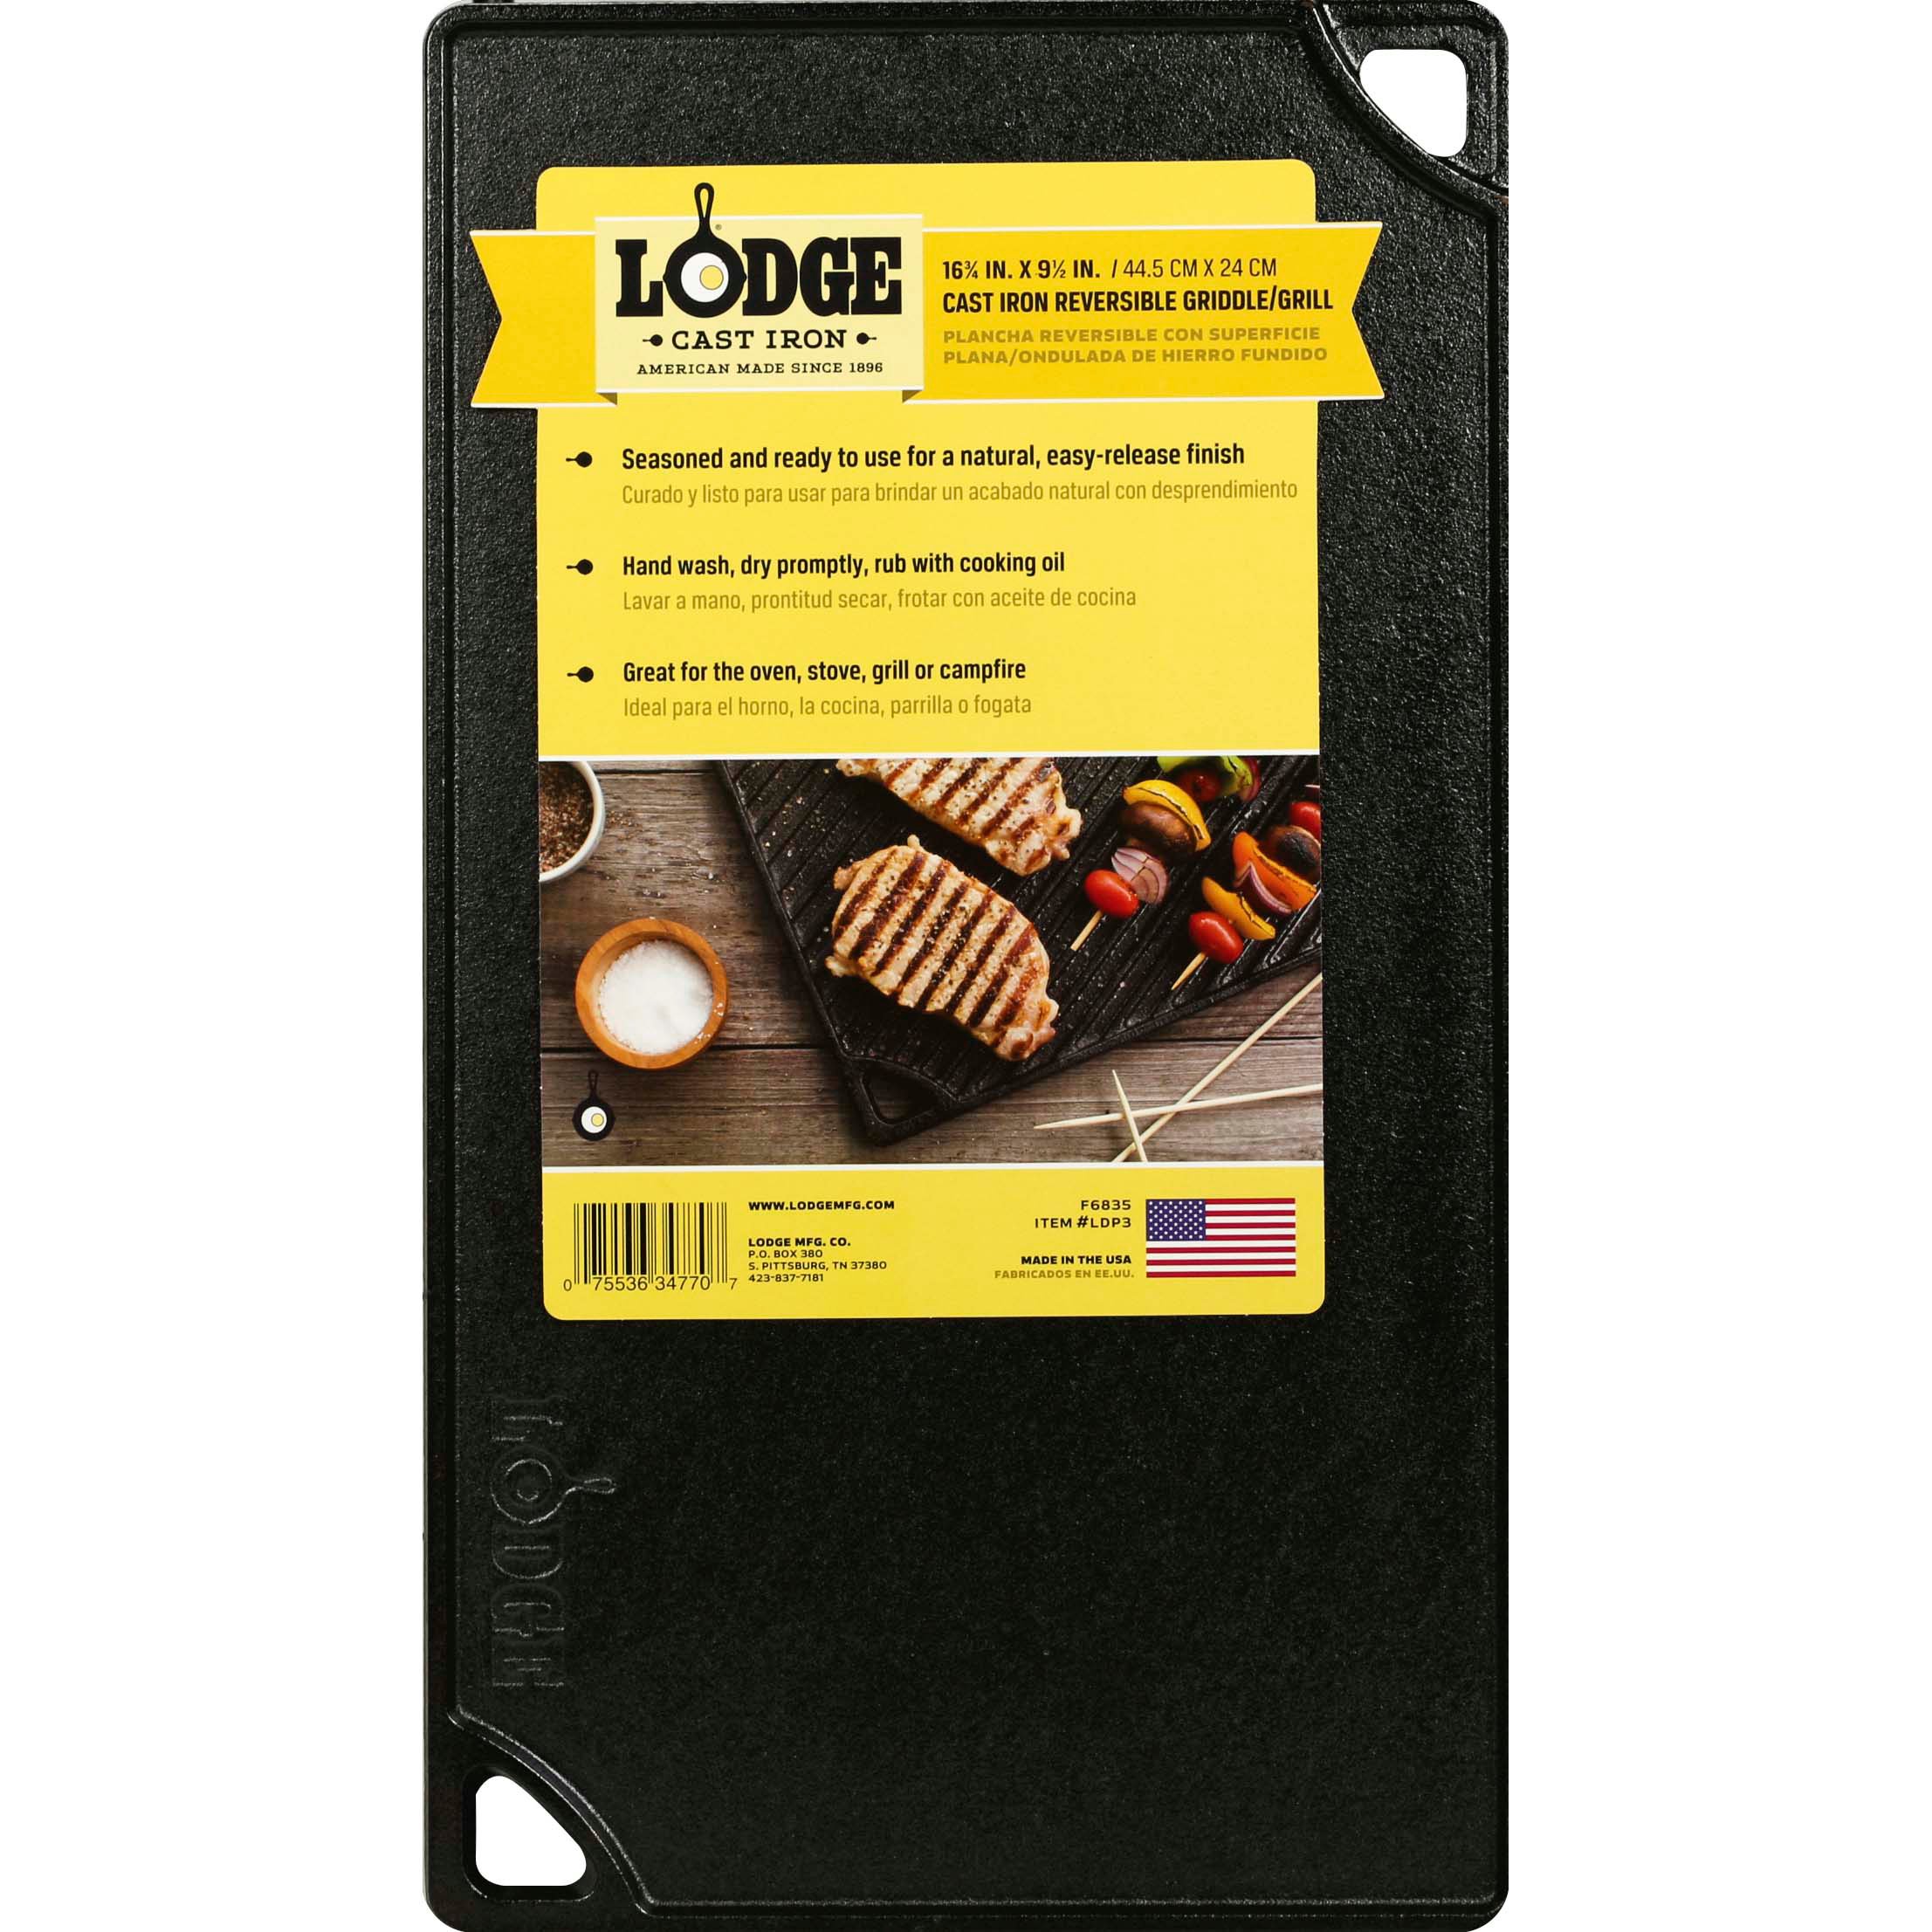 Lodge Cast Iron reversible baking sheet/grill  Advantageously shopping at